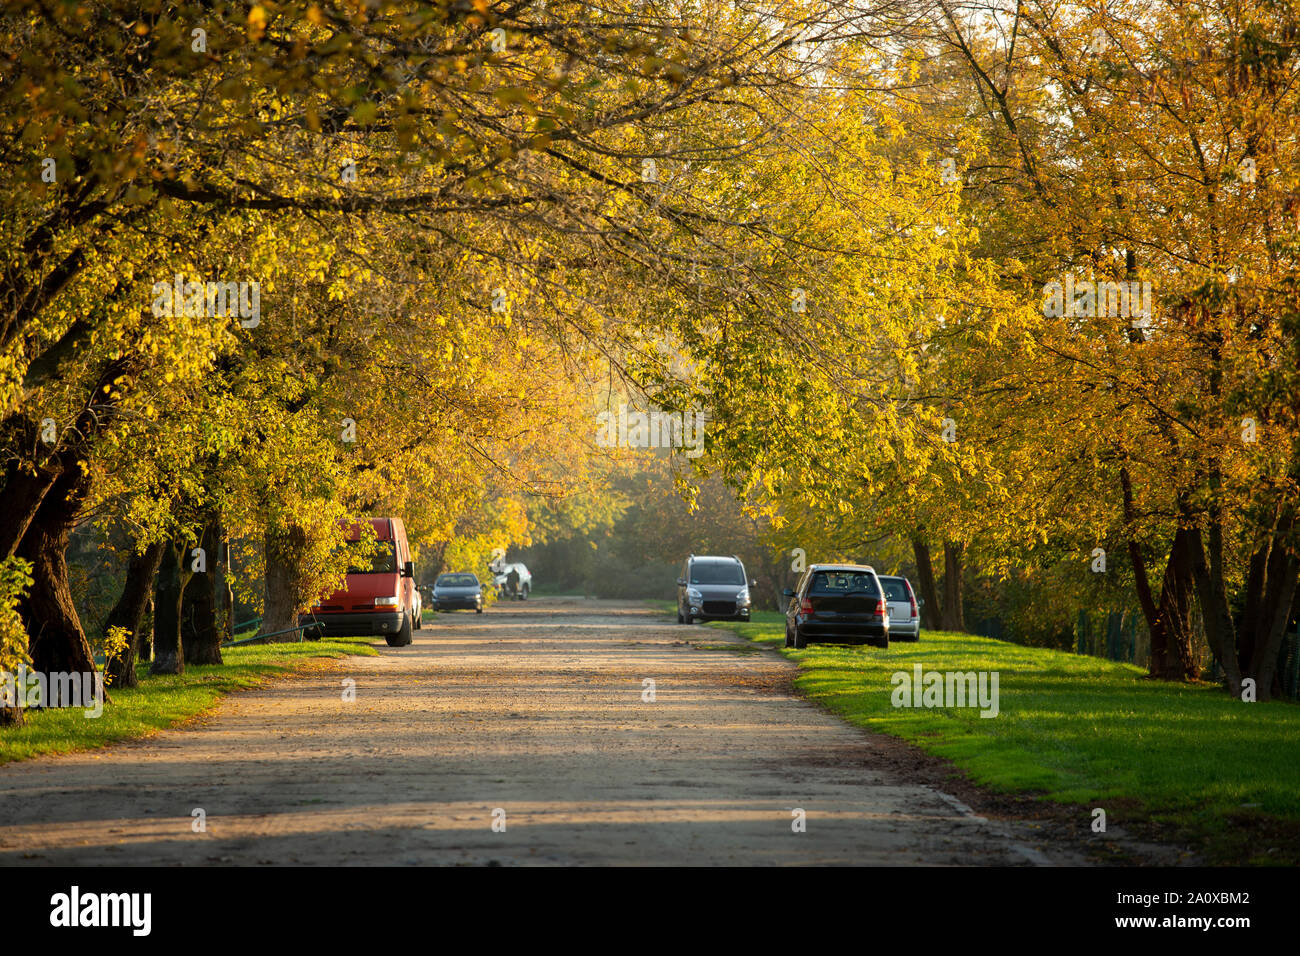 The road goes through the autumn park Stock Photo